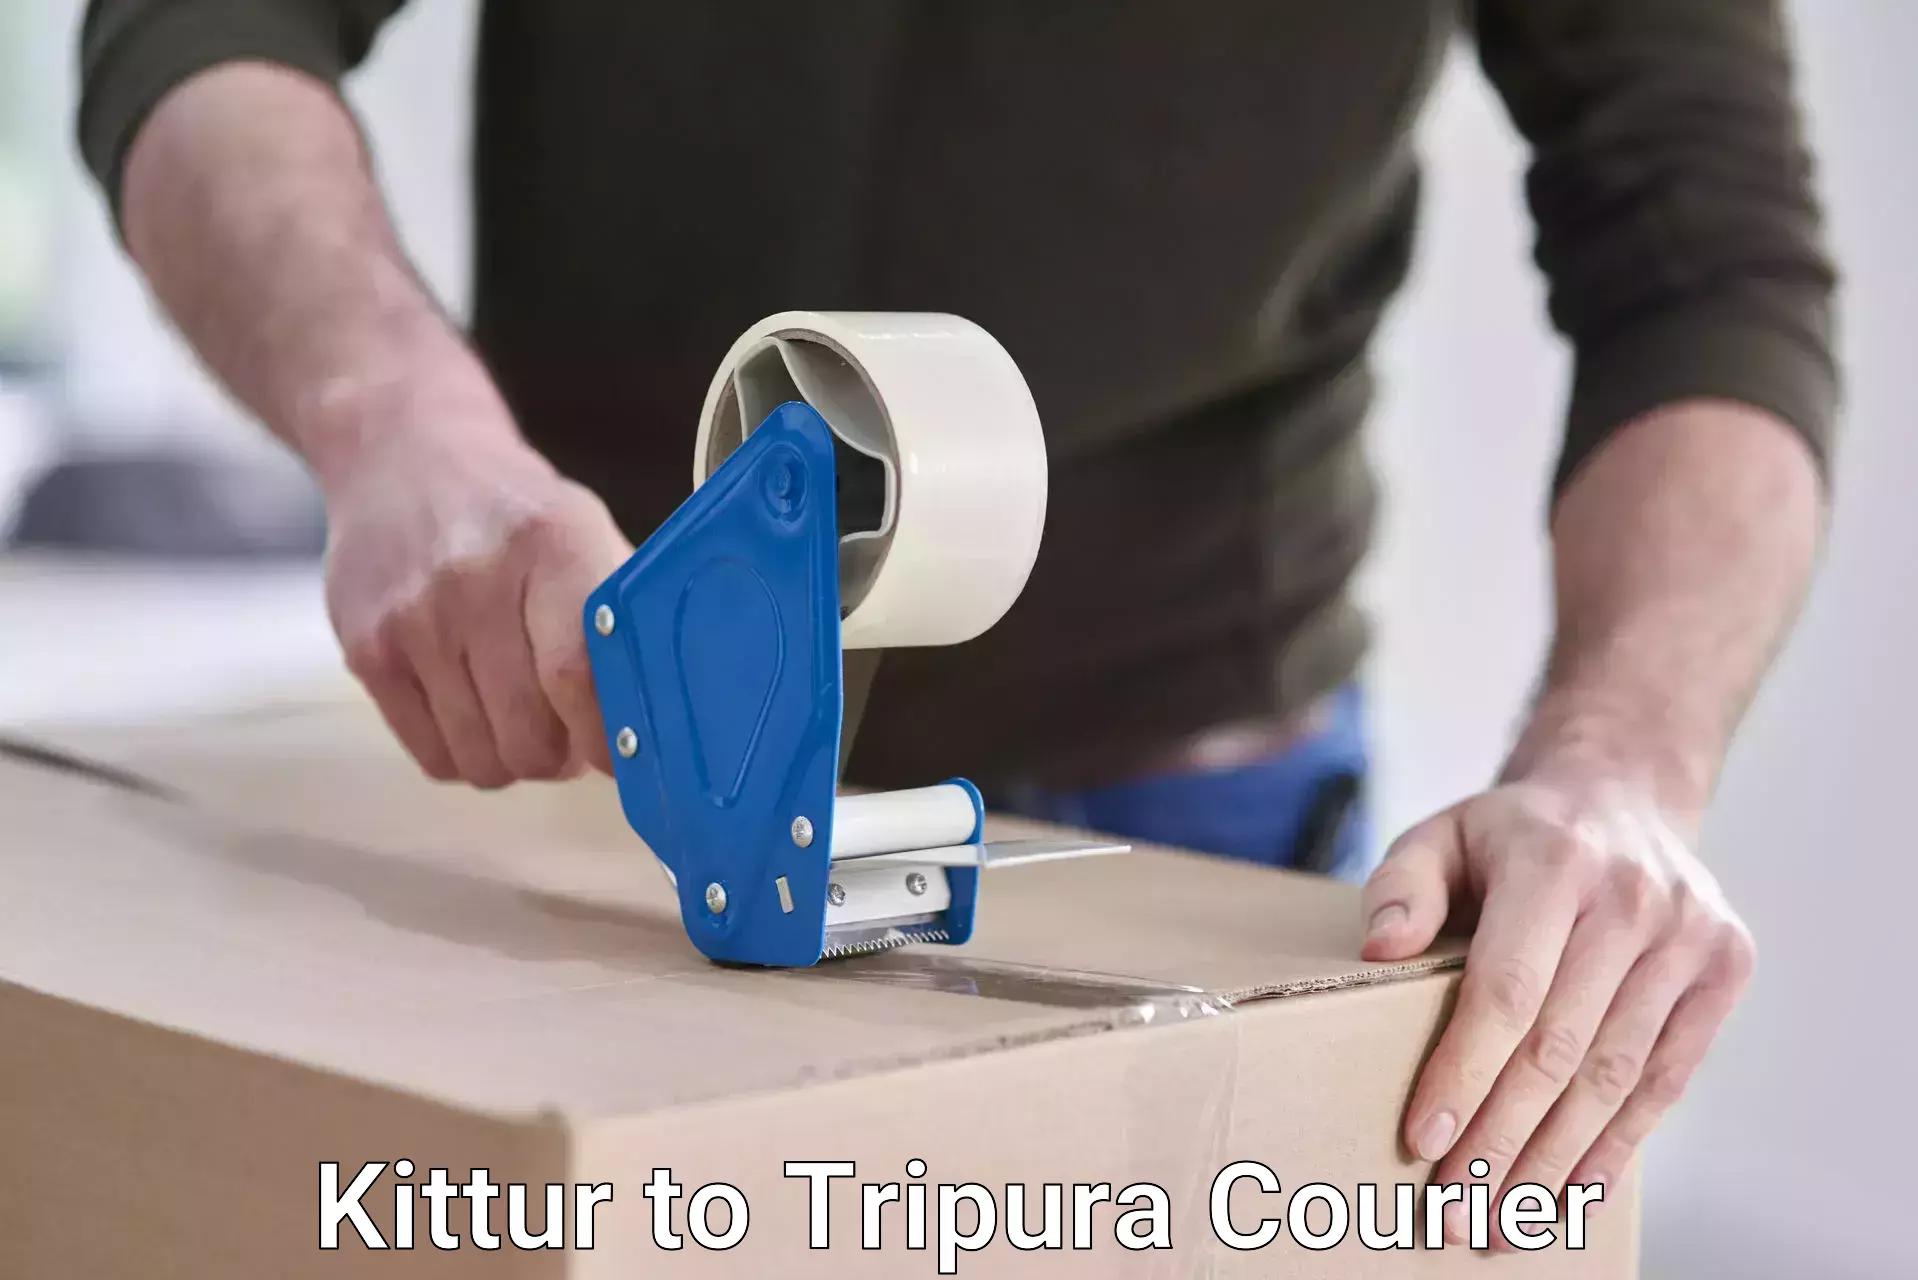 On-demand courier Kittur to Udaipur Tripura